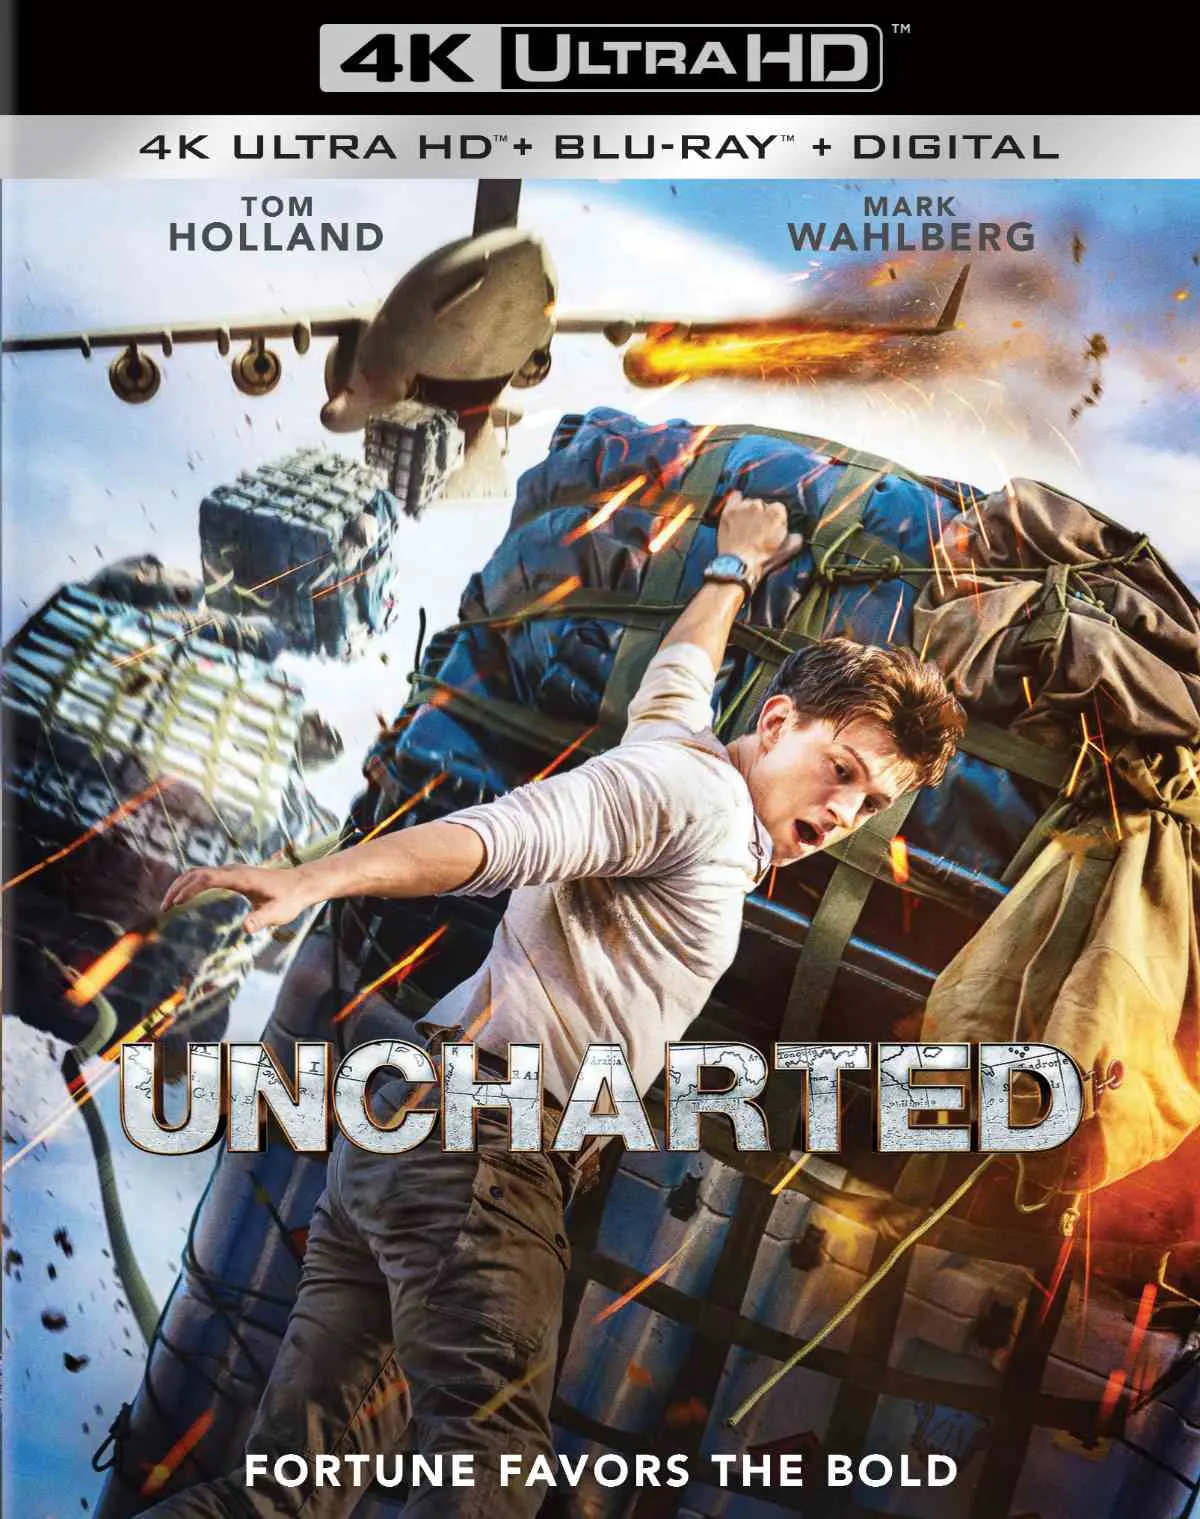 Uncharted Digital, 4K Ultra HD, Blu-ray and DVD